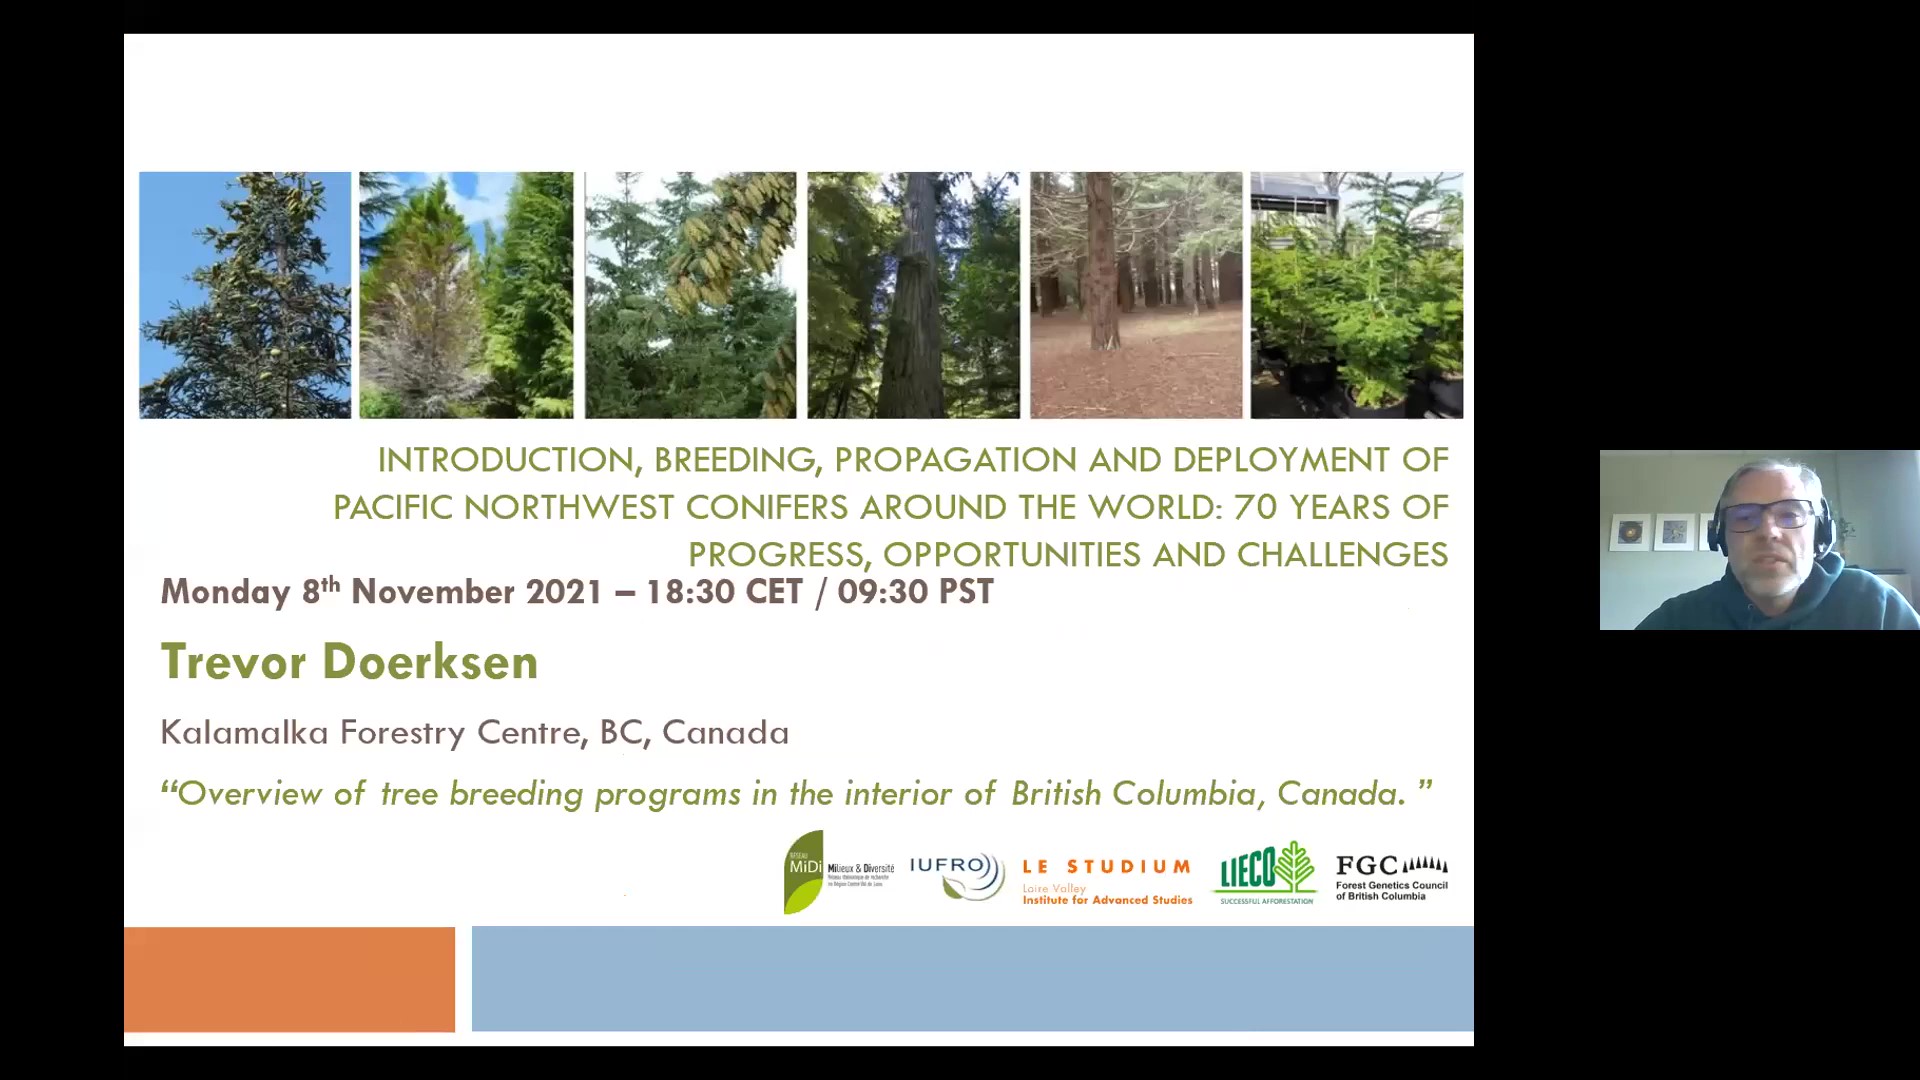 Overview of tree breeding programs in the interior of British Columbia, Canada - Trevor Doerksen